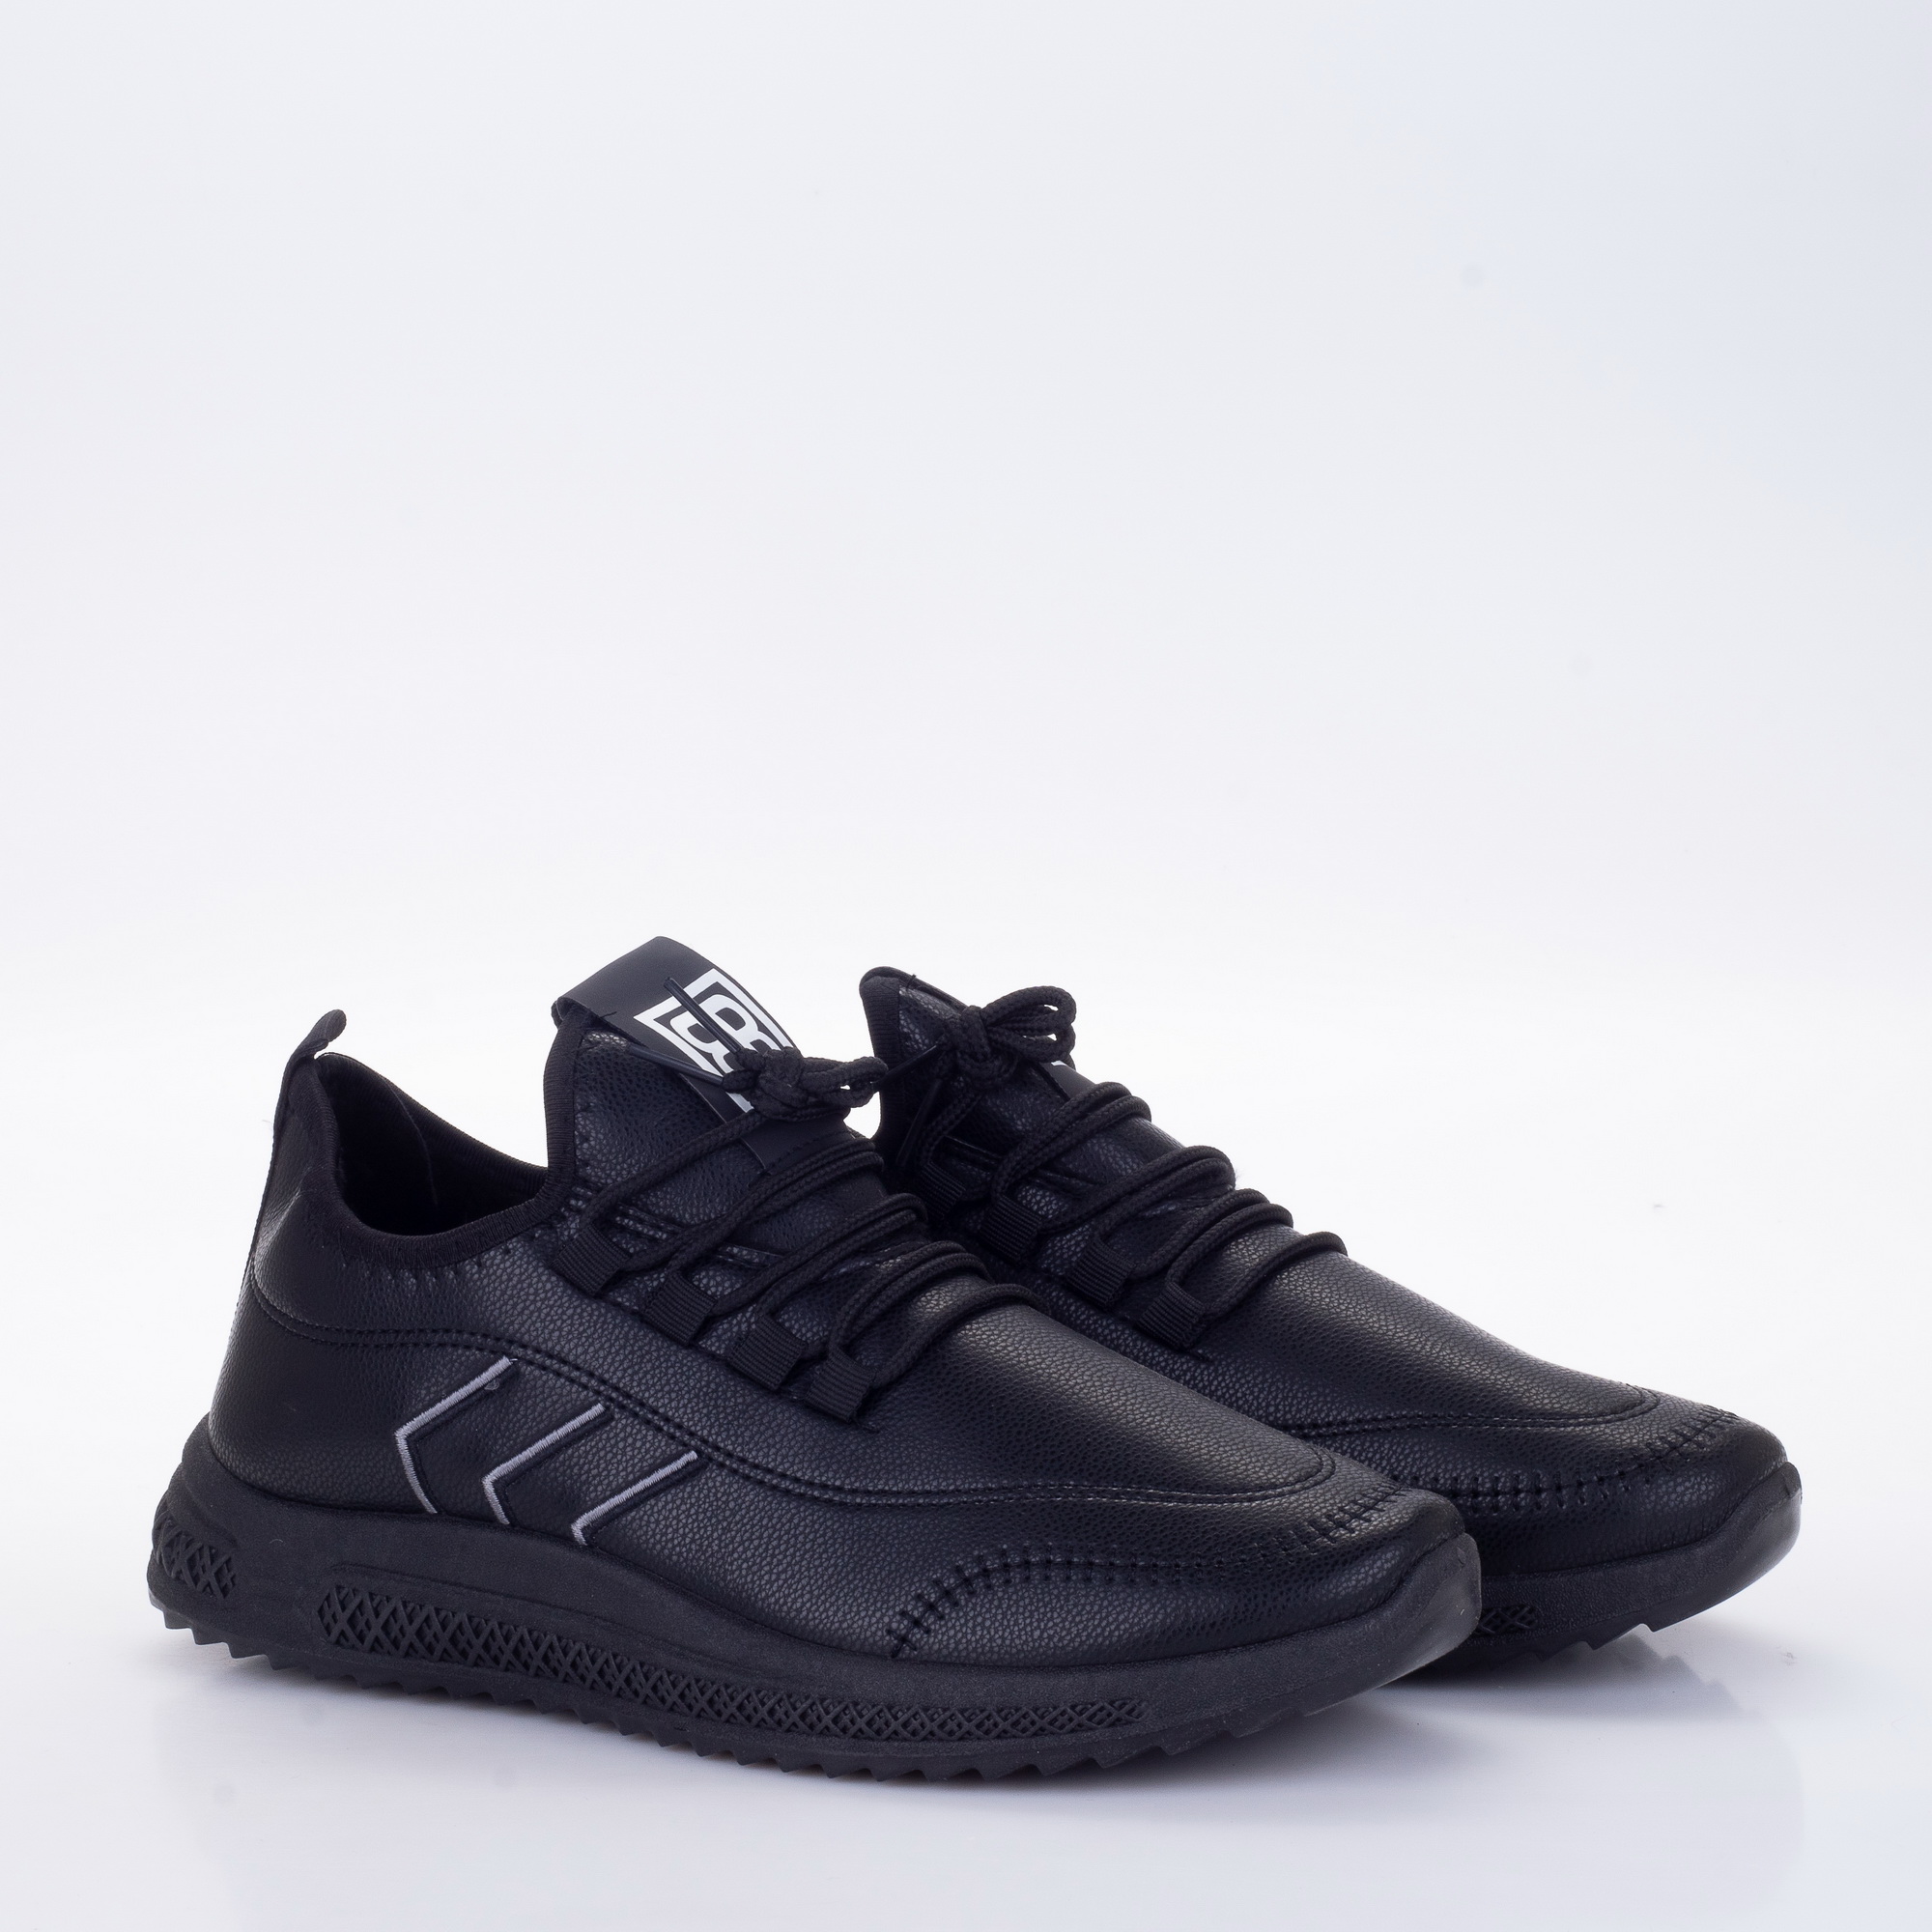 Фото Кроcсовки мужские J11 black купить на lauf.shoes